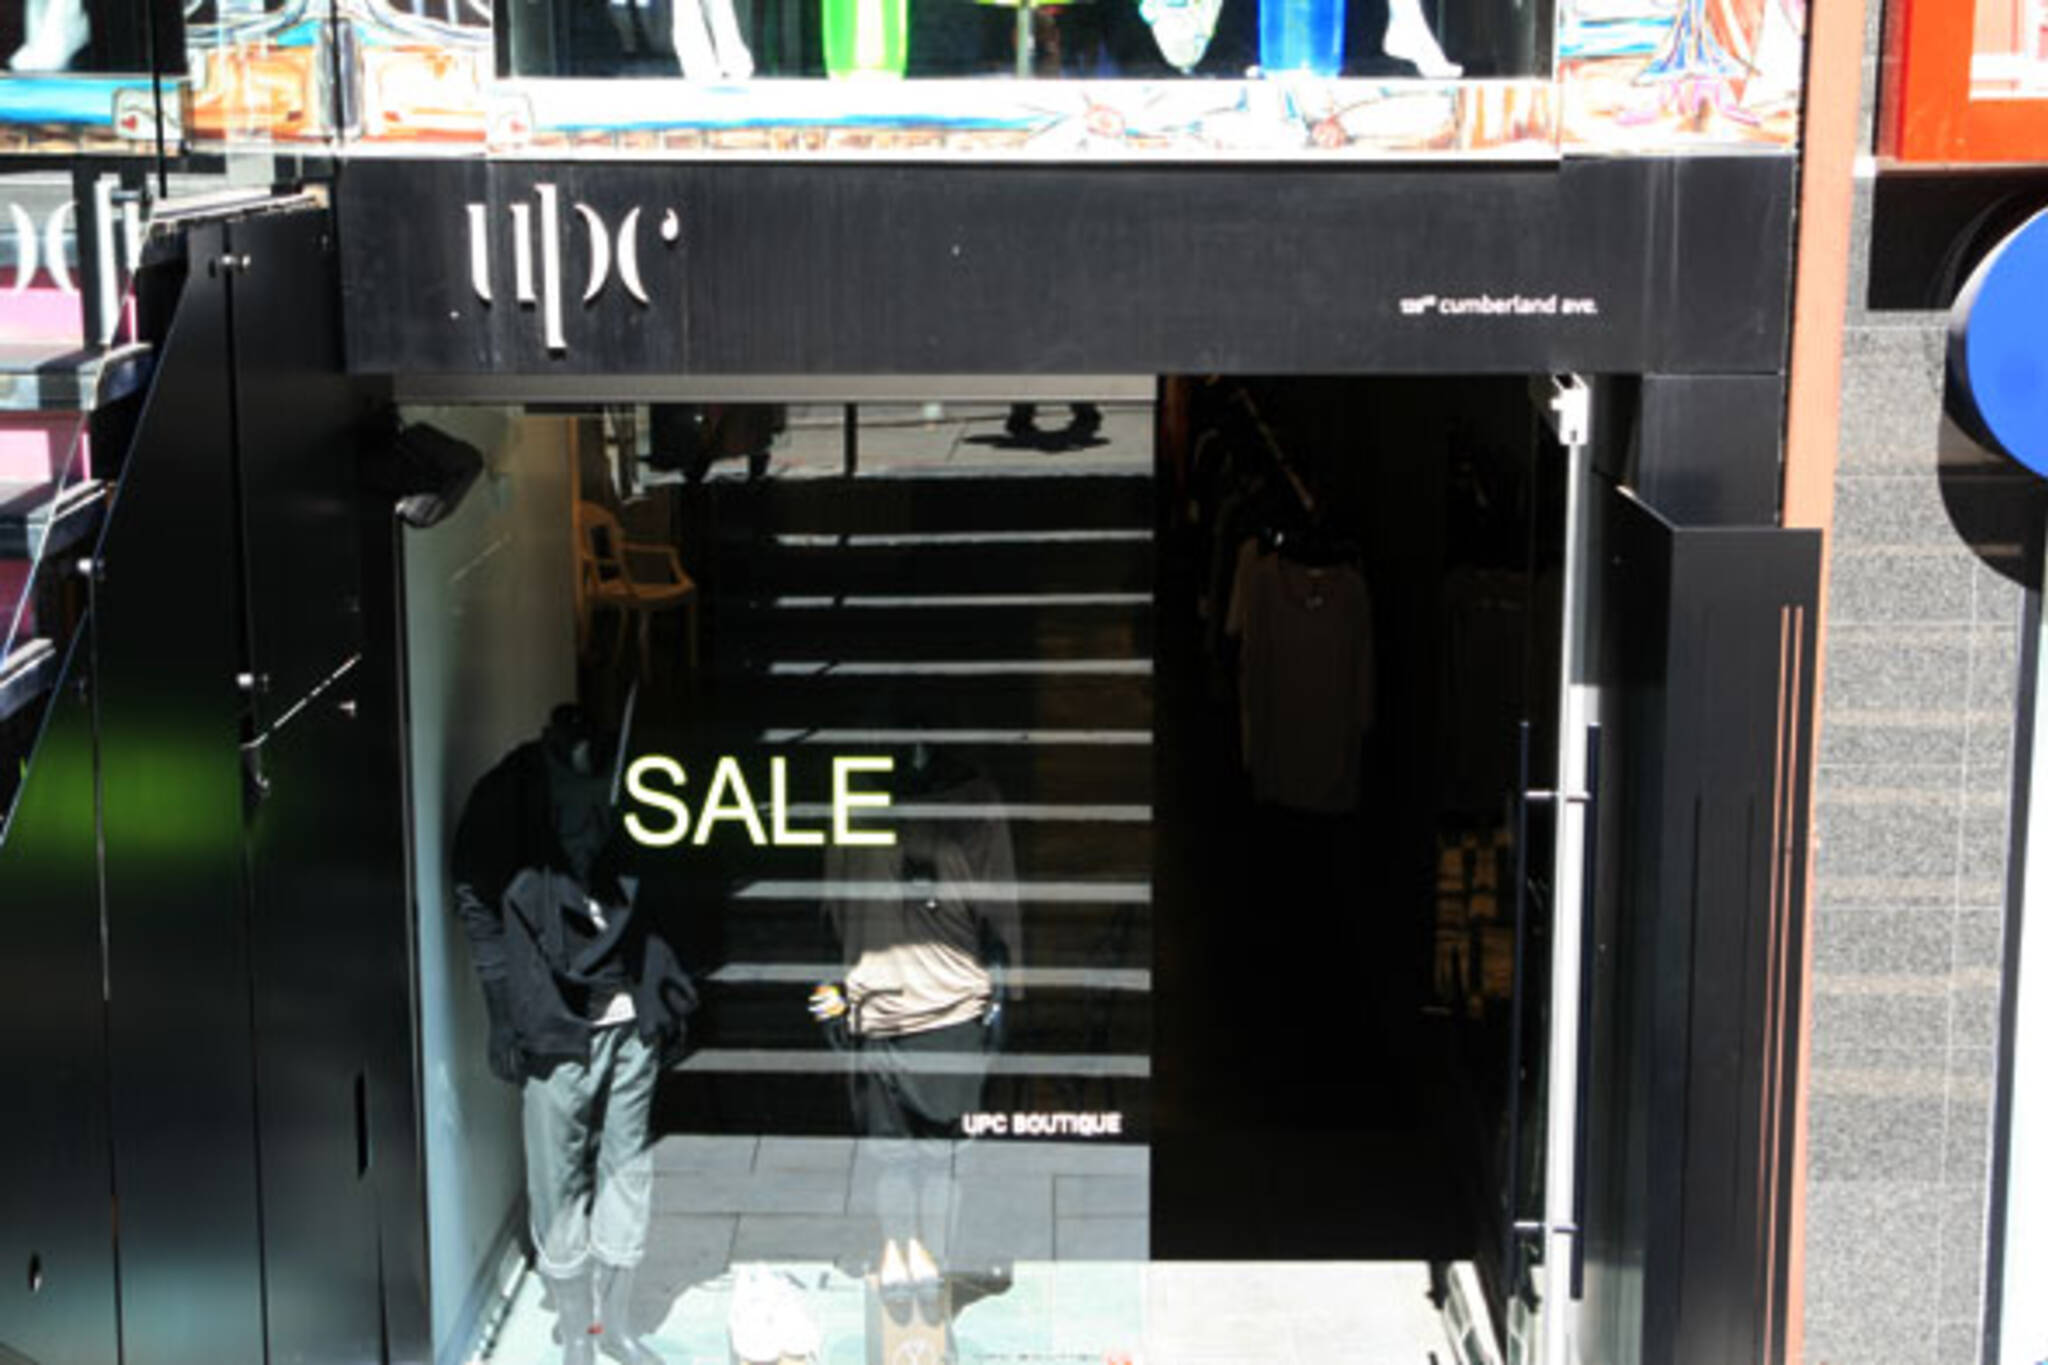 UPC Boutique